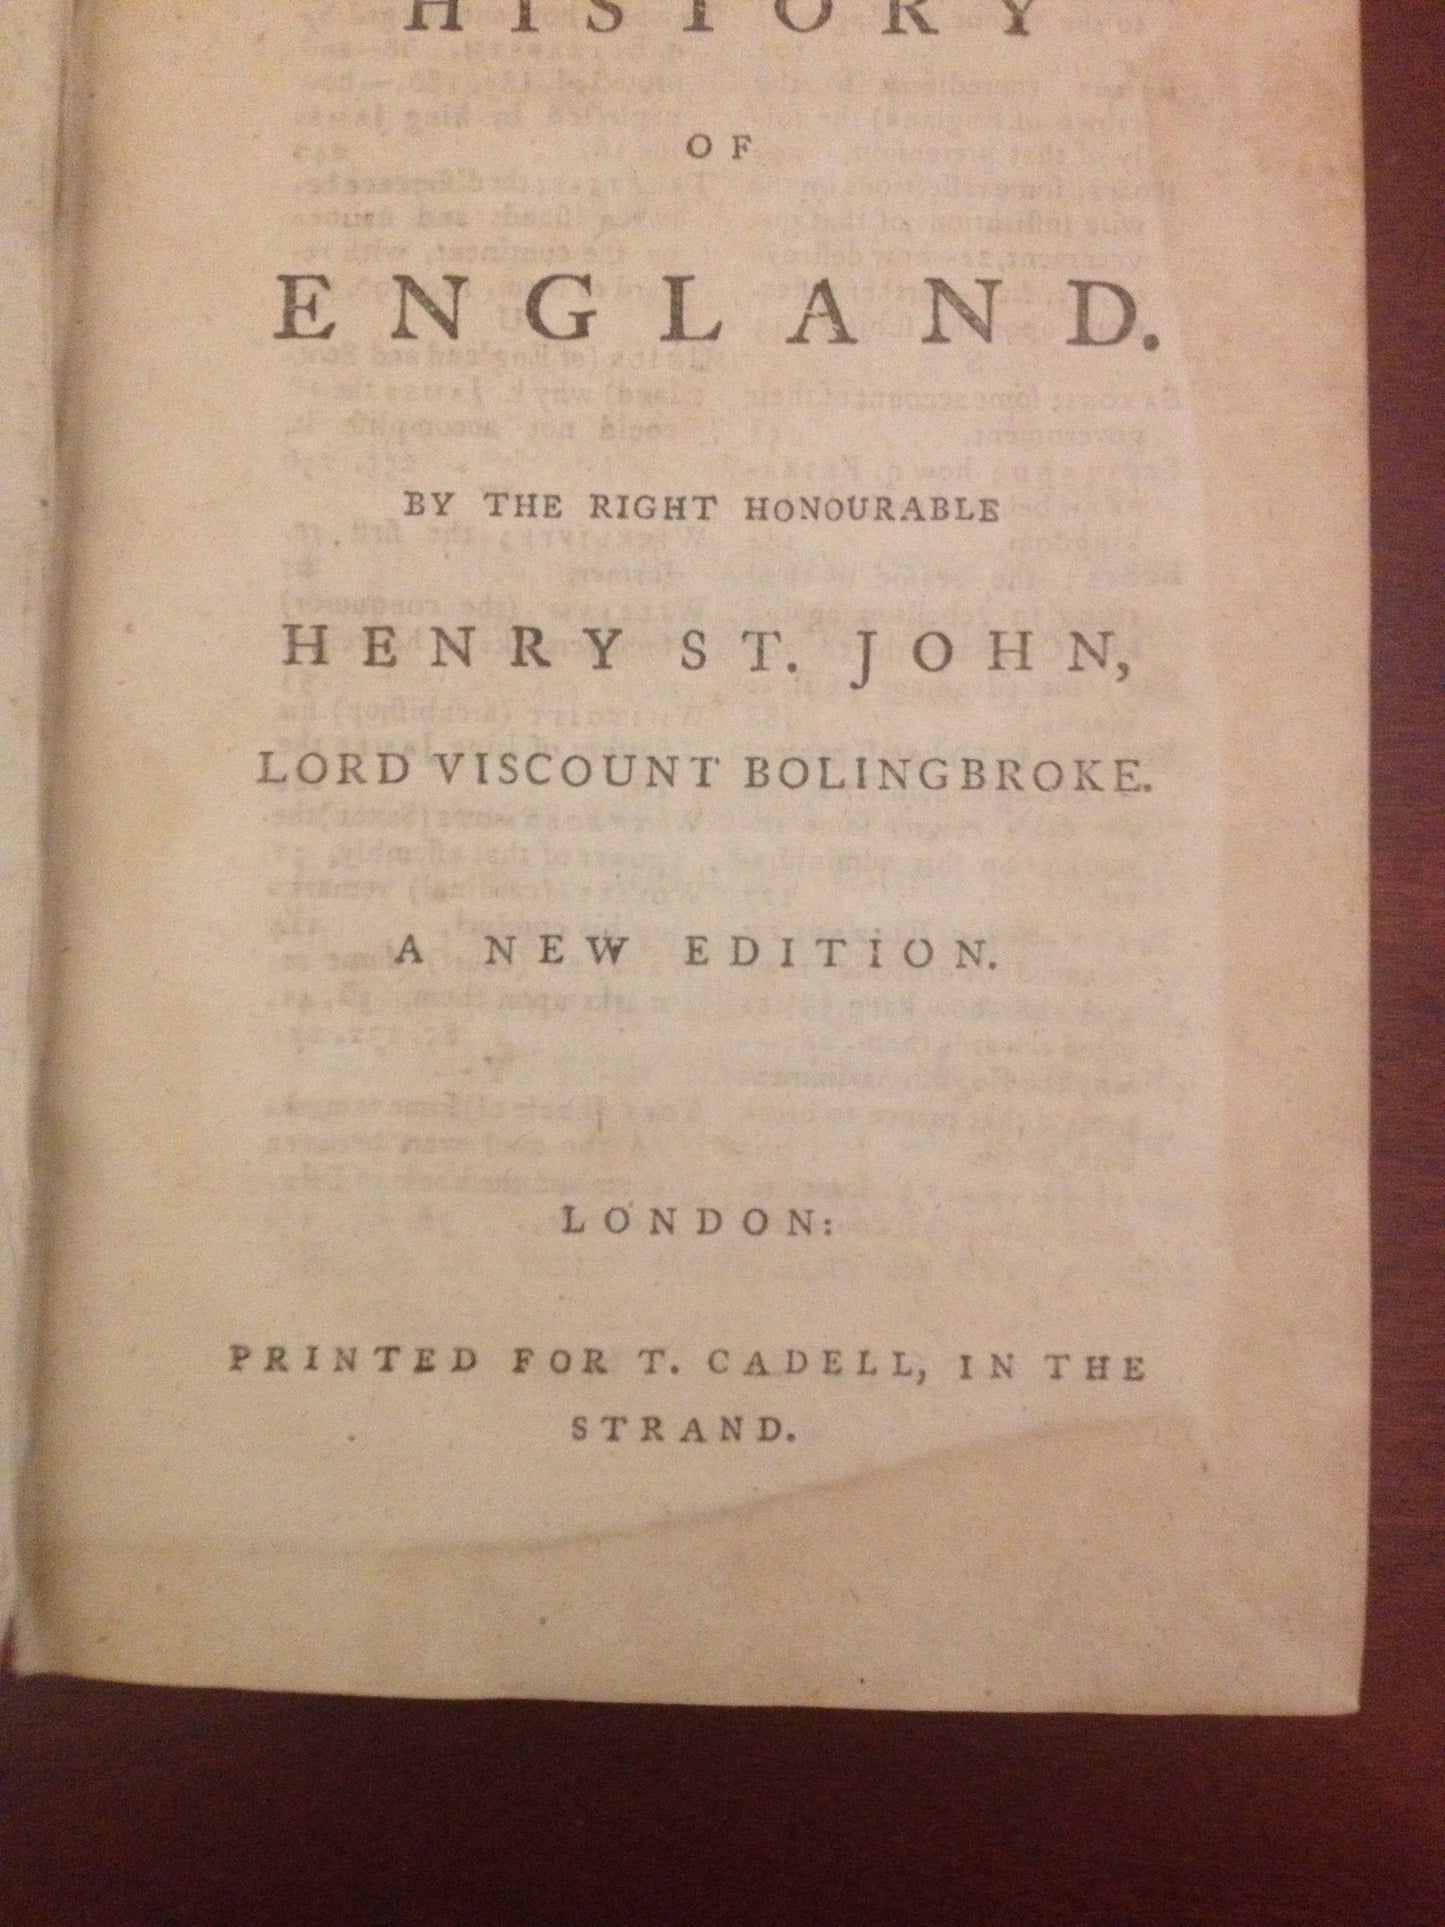 REMARKS HISTORY OF ENGLAND - HENRY ST. JOHN VICOUNT BOLINGBROKE